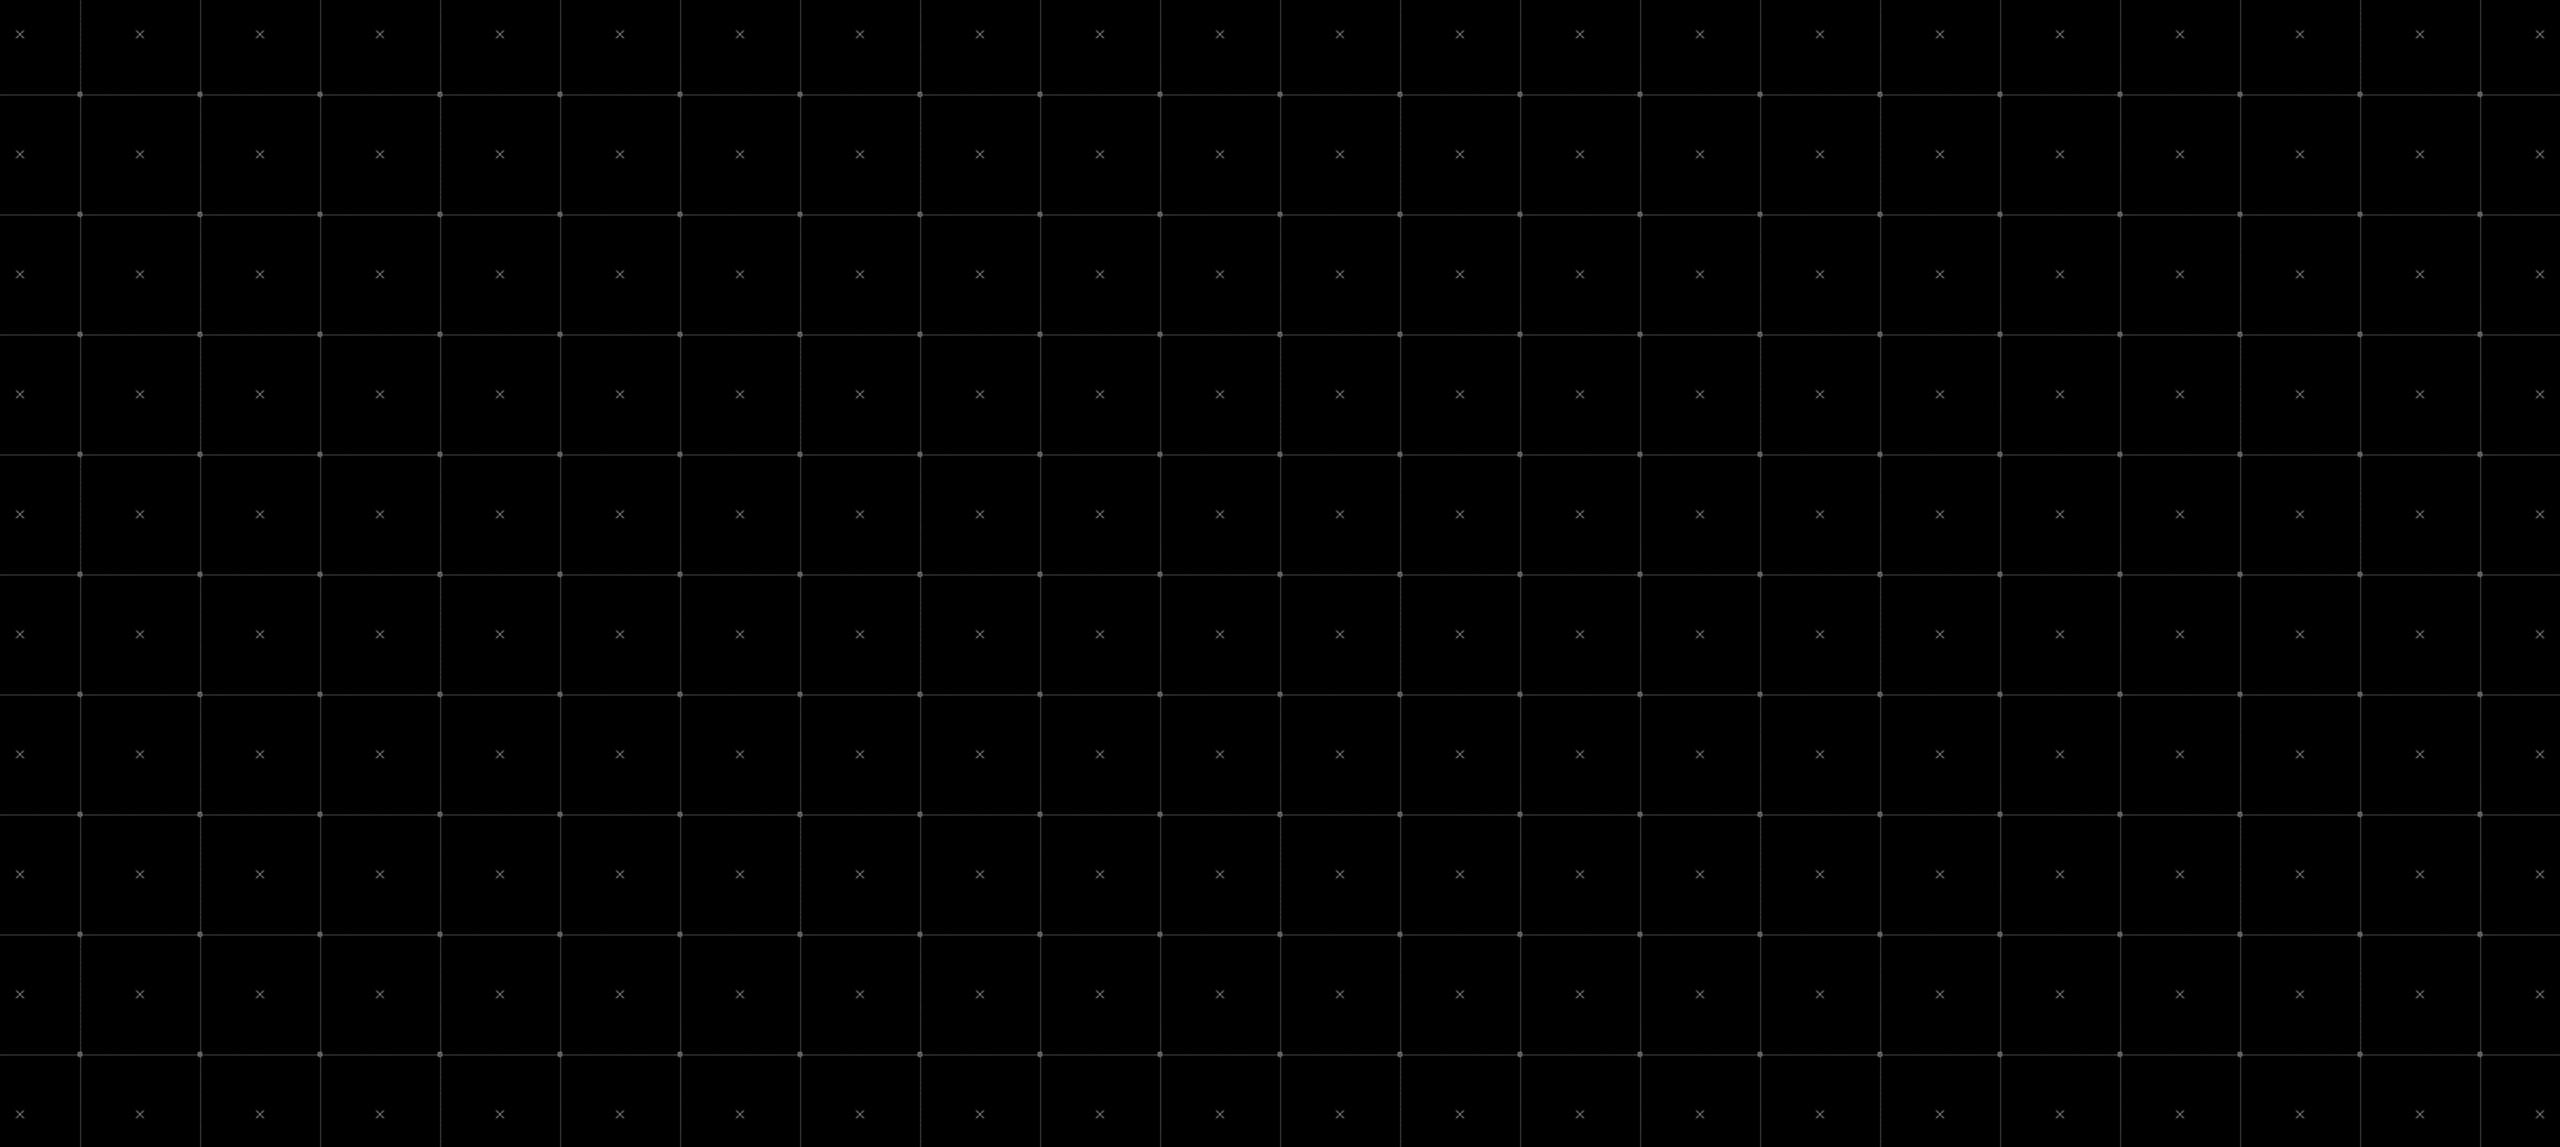 A black grid design